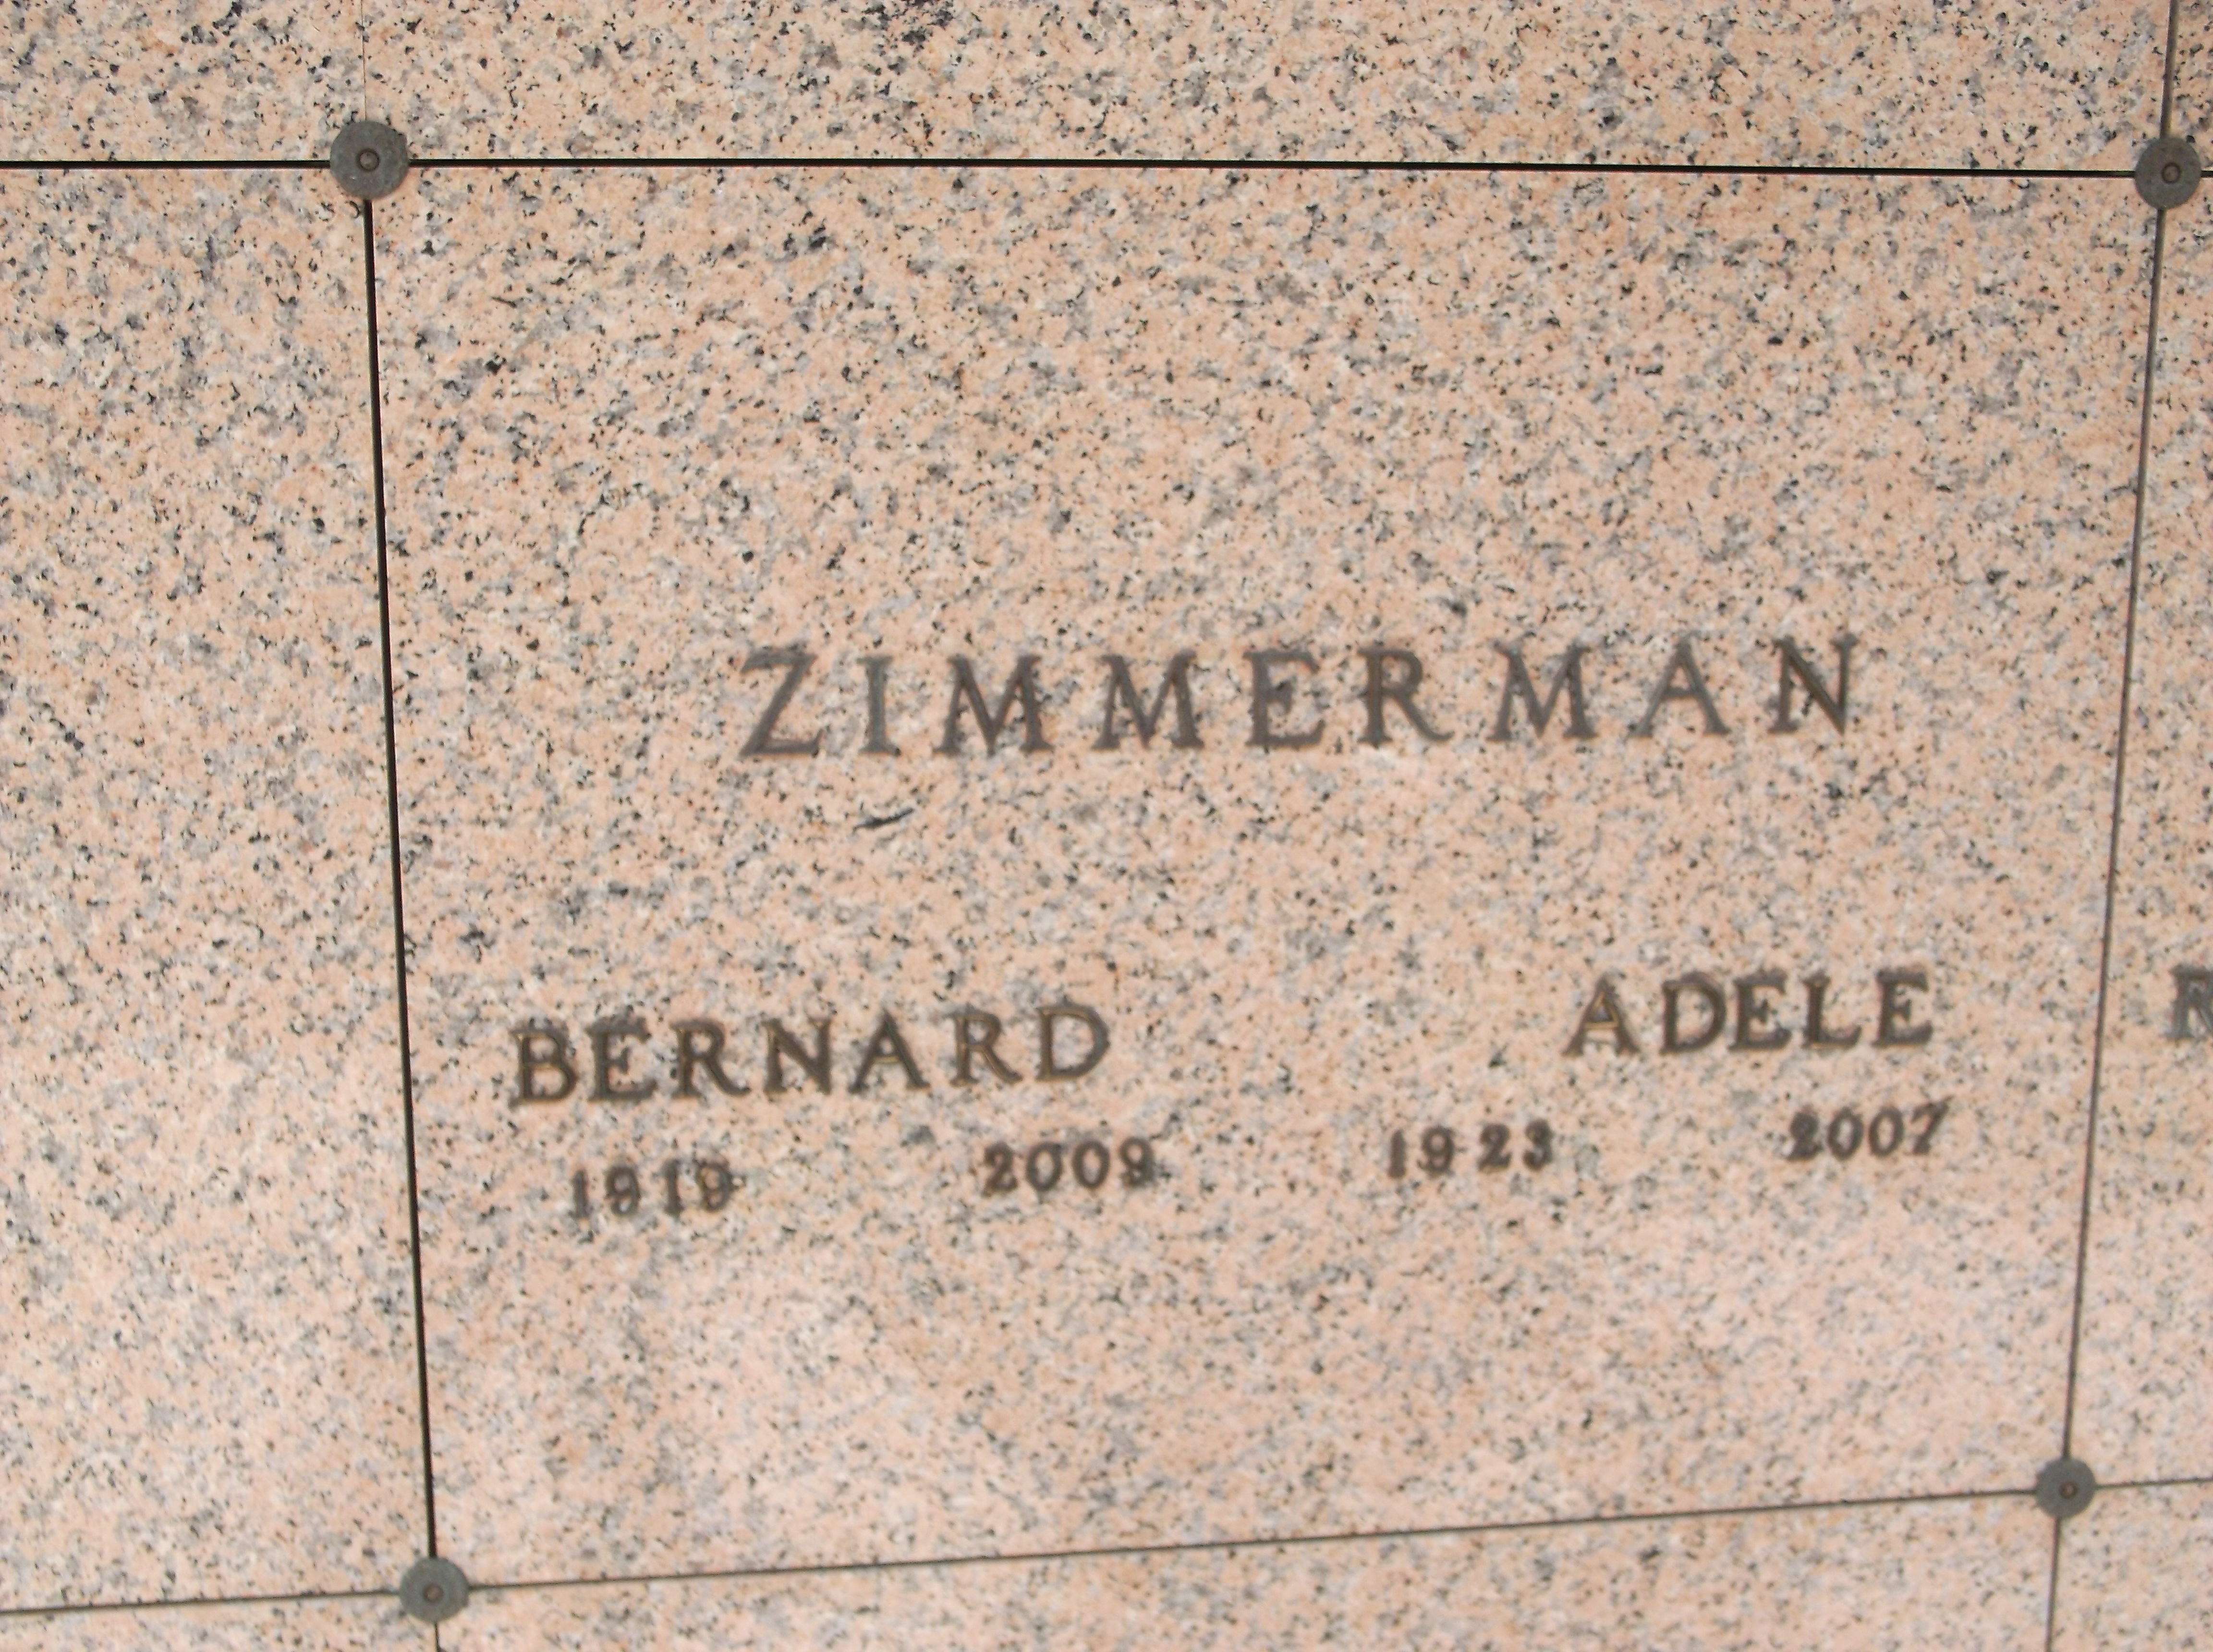 Bernard Zimmerman